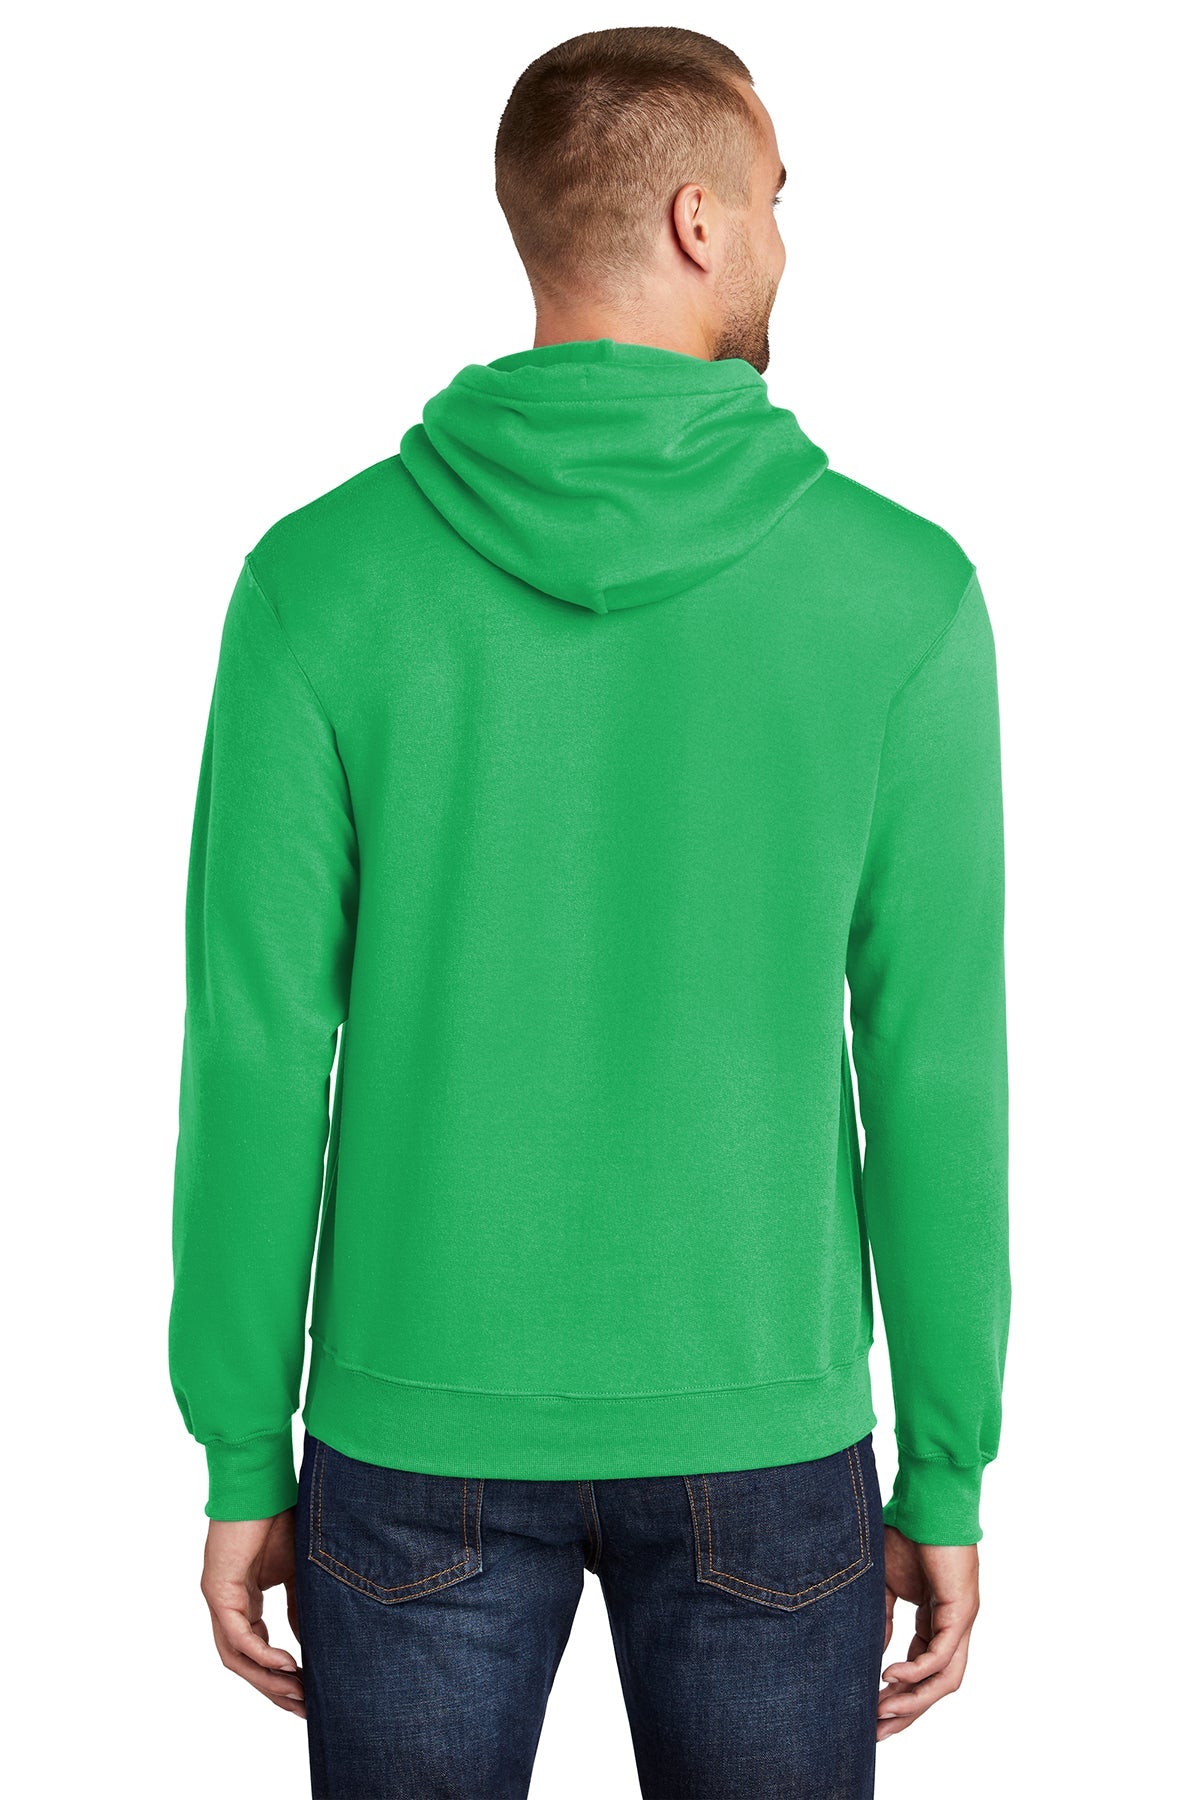 port & company_pc78h _clover green_company_logo_sweatshirts